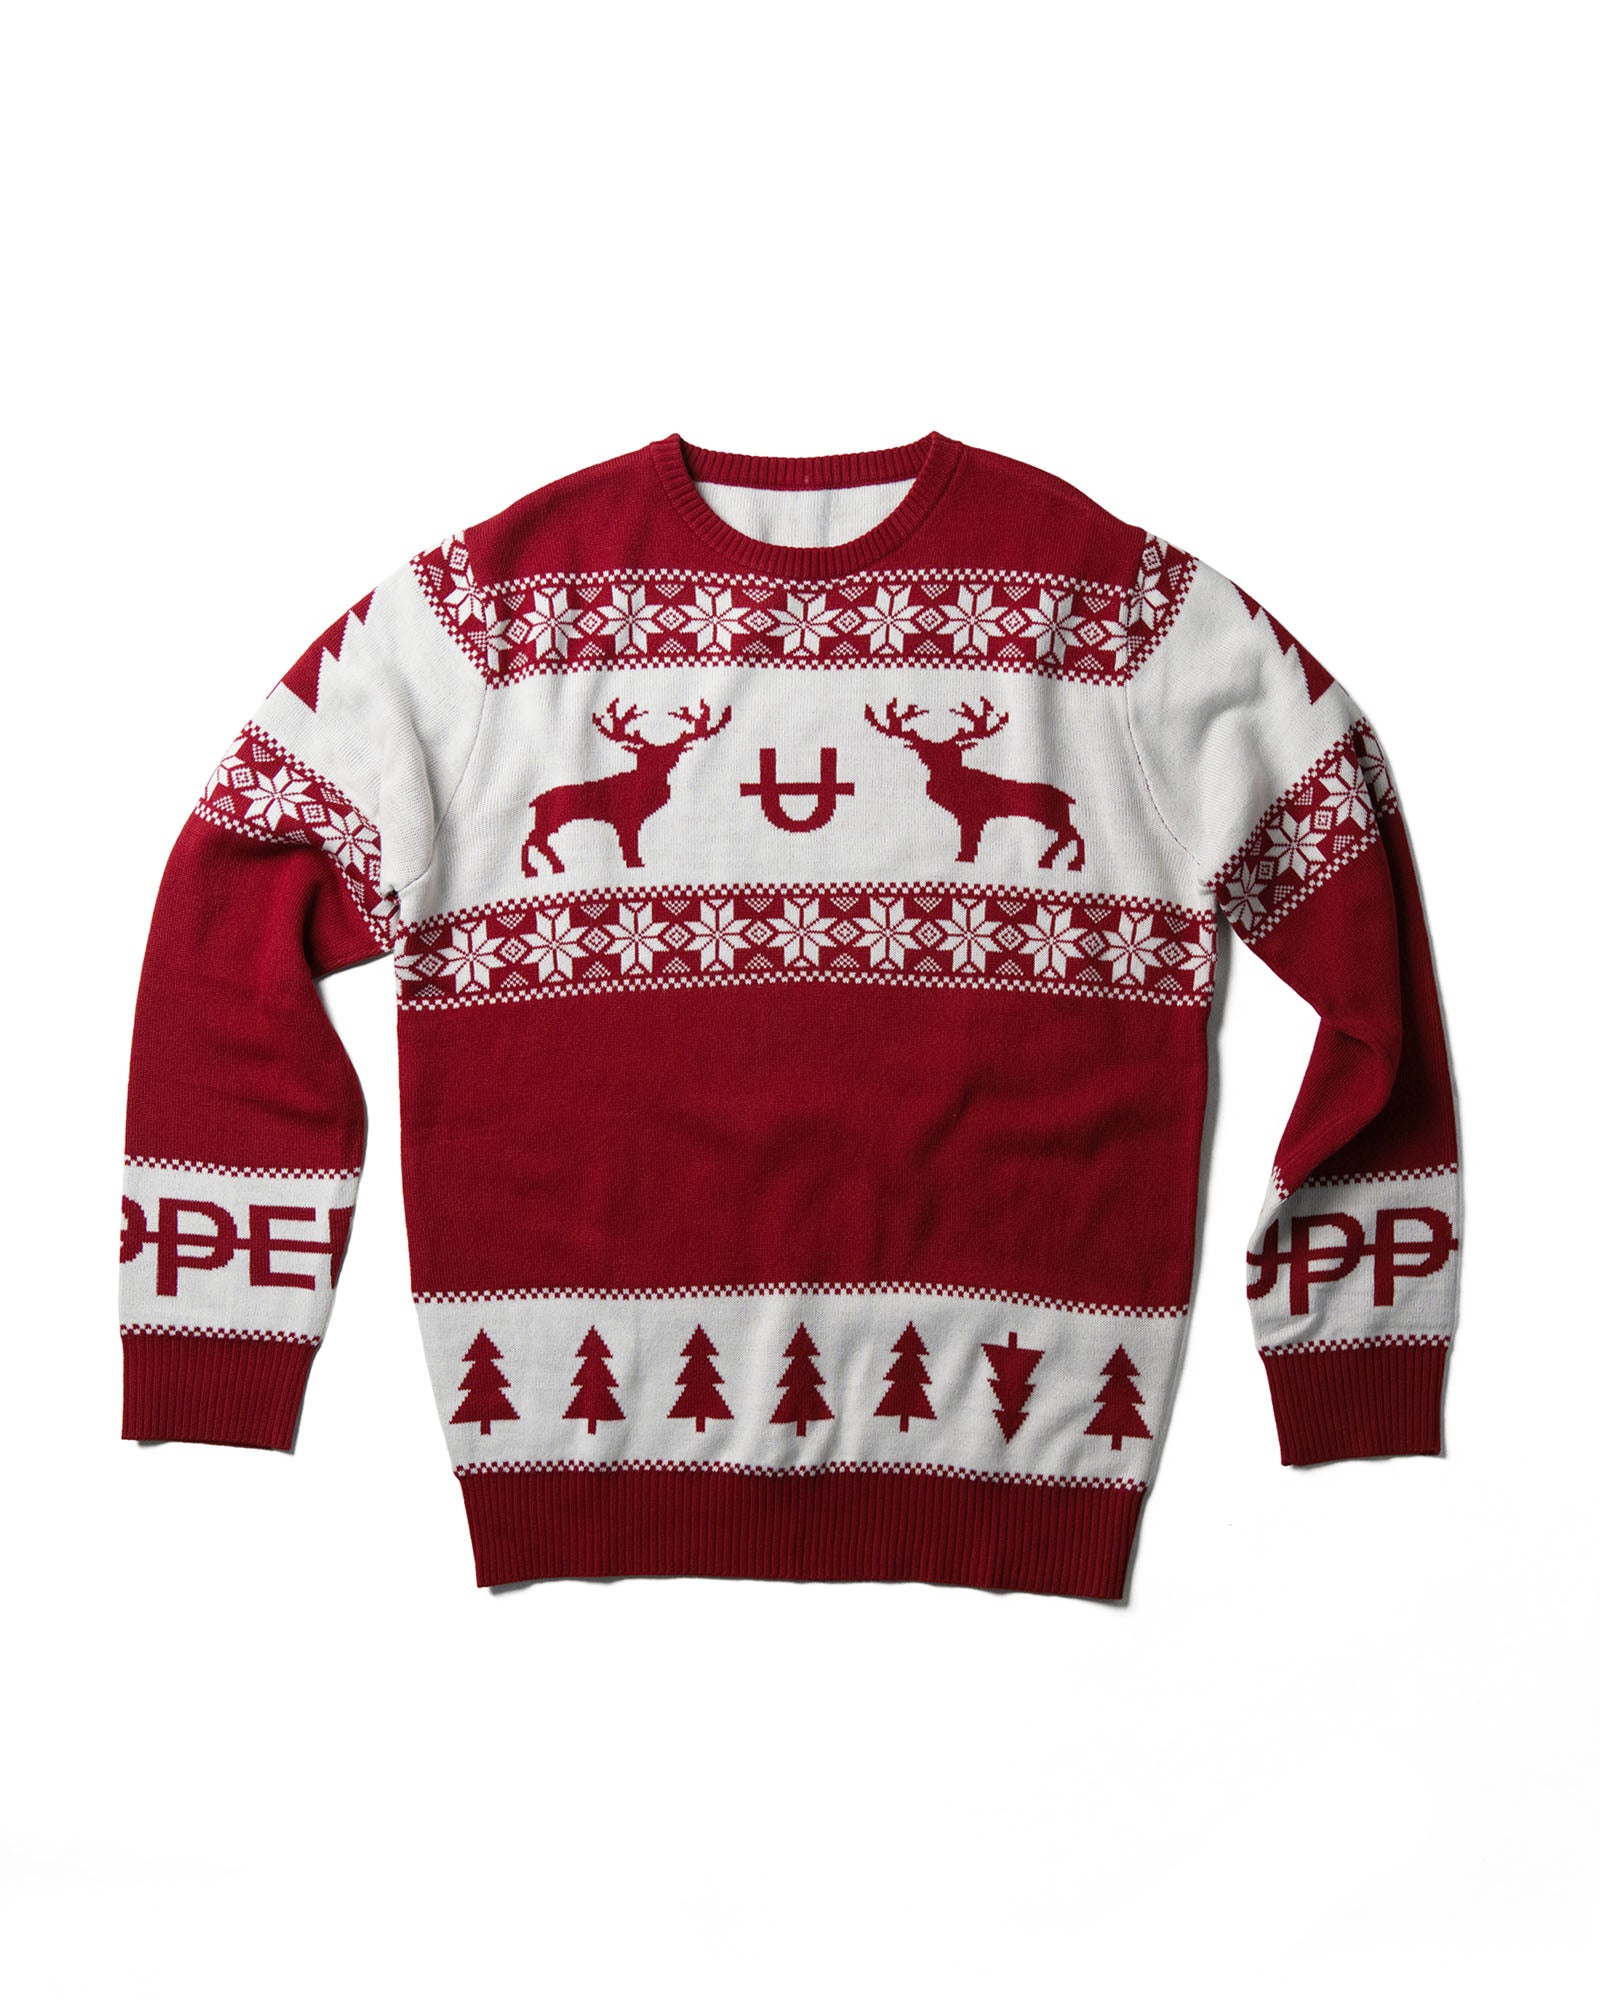 Uppper Holiday Sweater